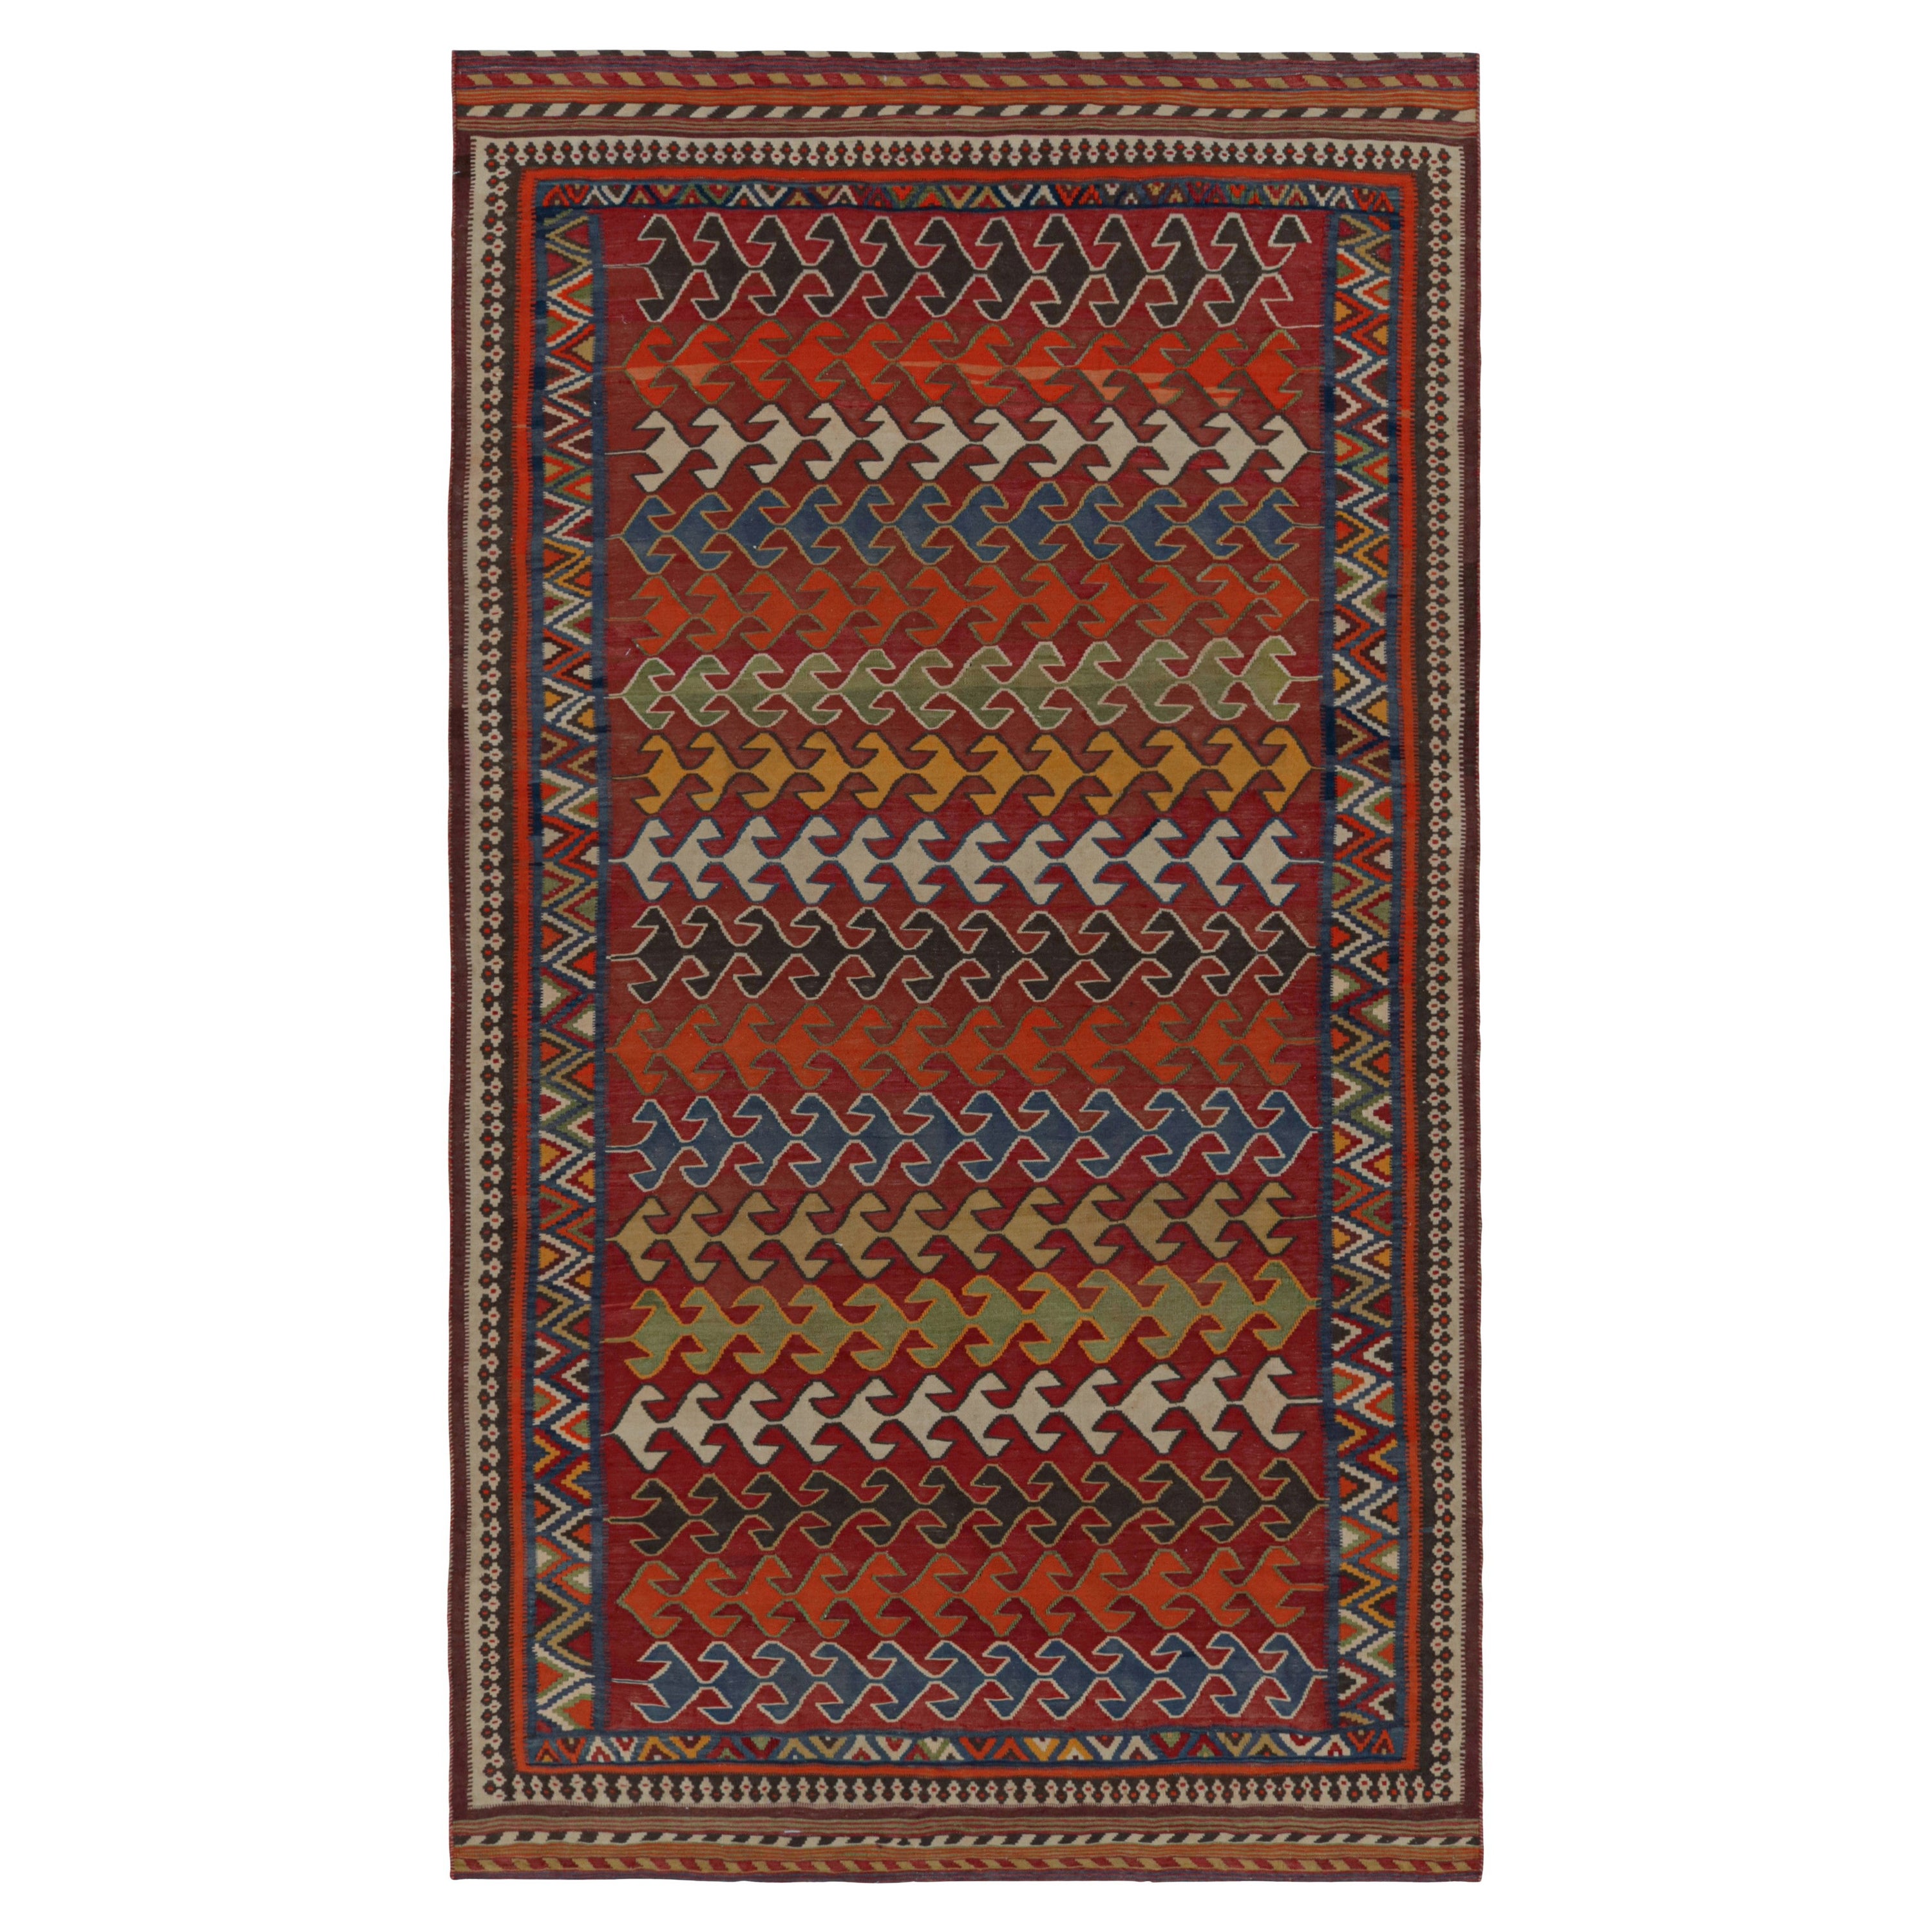 Vintage Afghani tribal Kilim rug, with Geometric Patterns, from Rug & Kilim For Sale